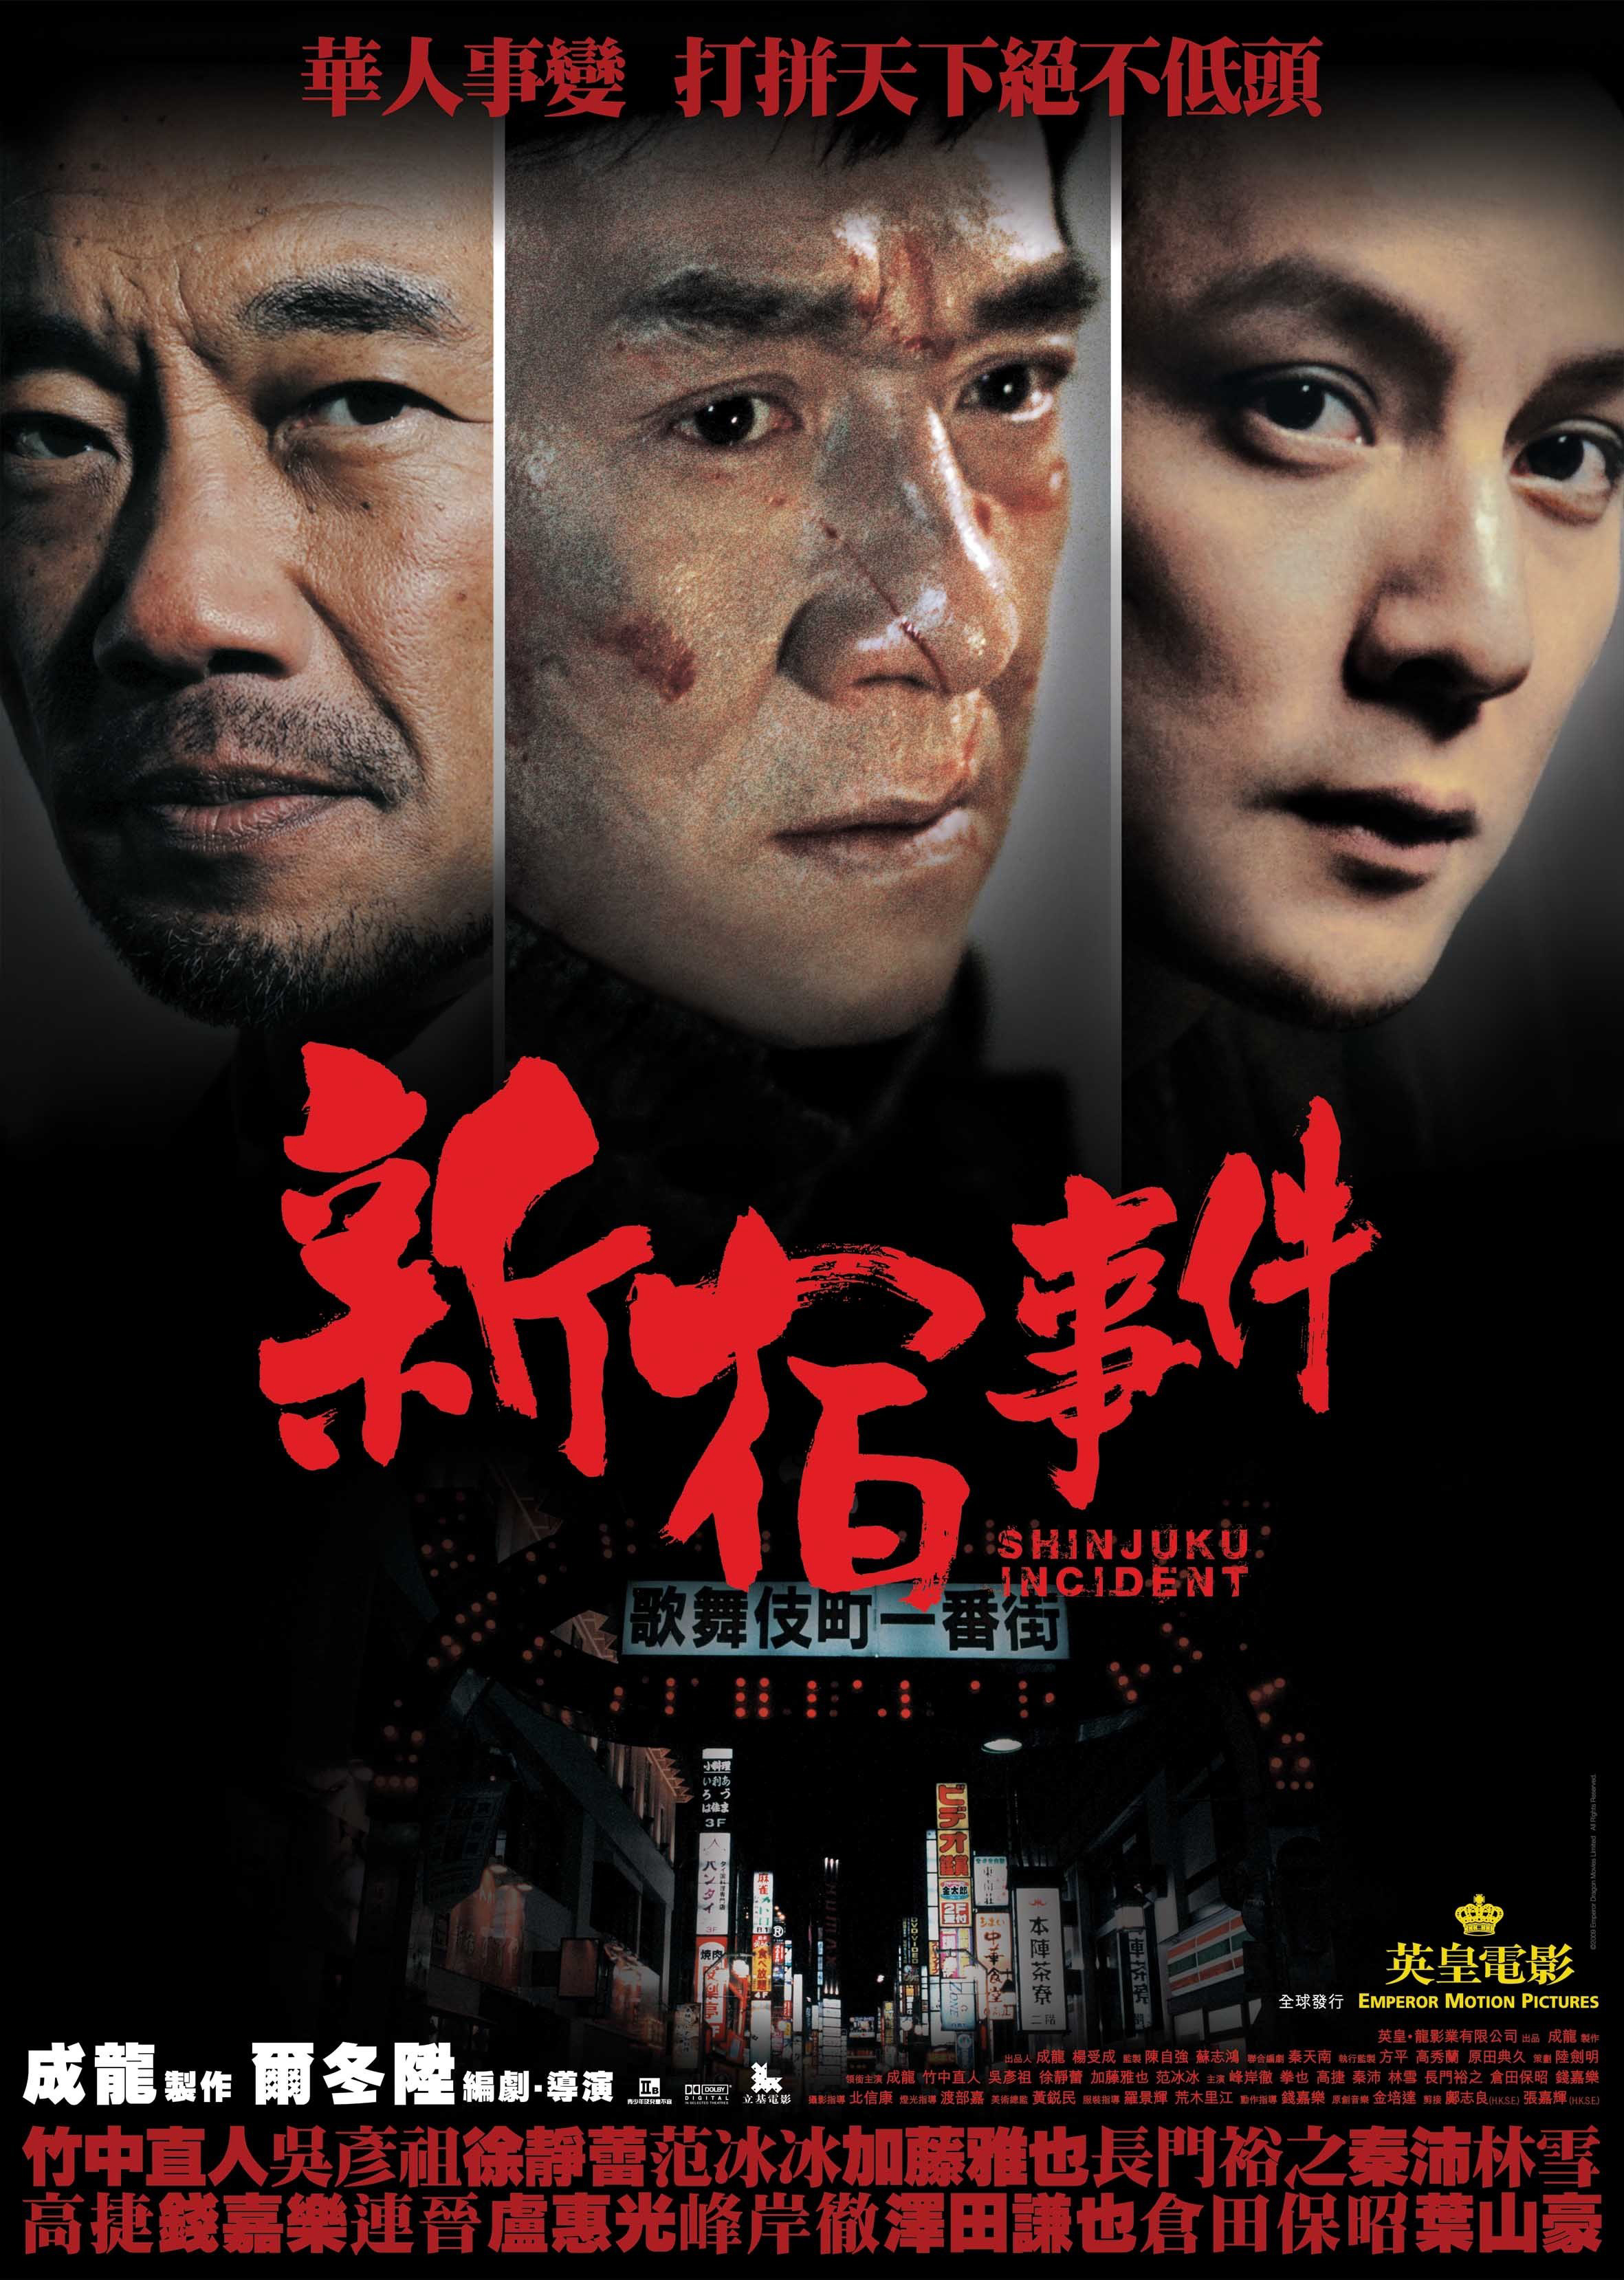 Poster Phim Đại Náo Shinjuku (Shinjuku Incident)